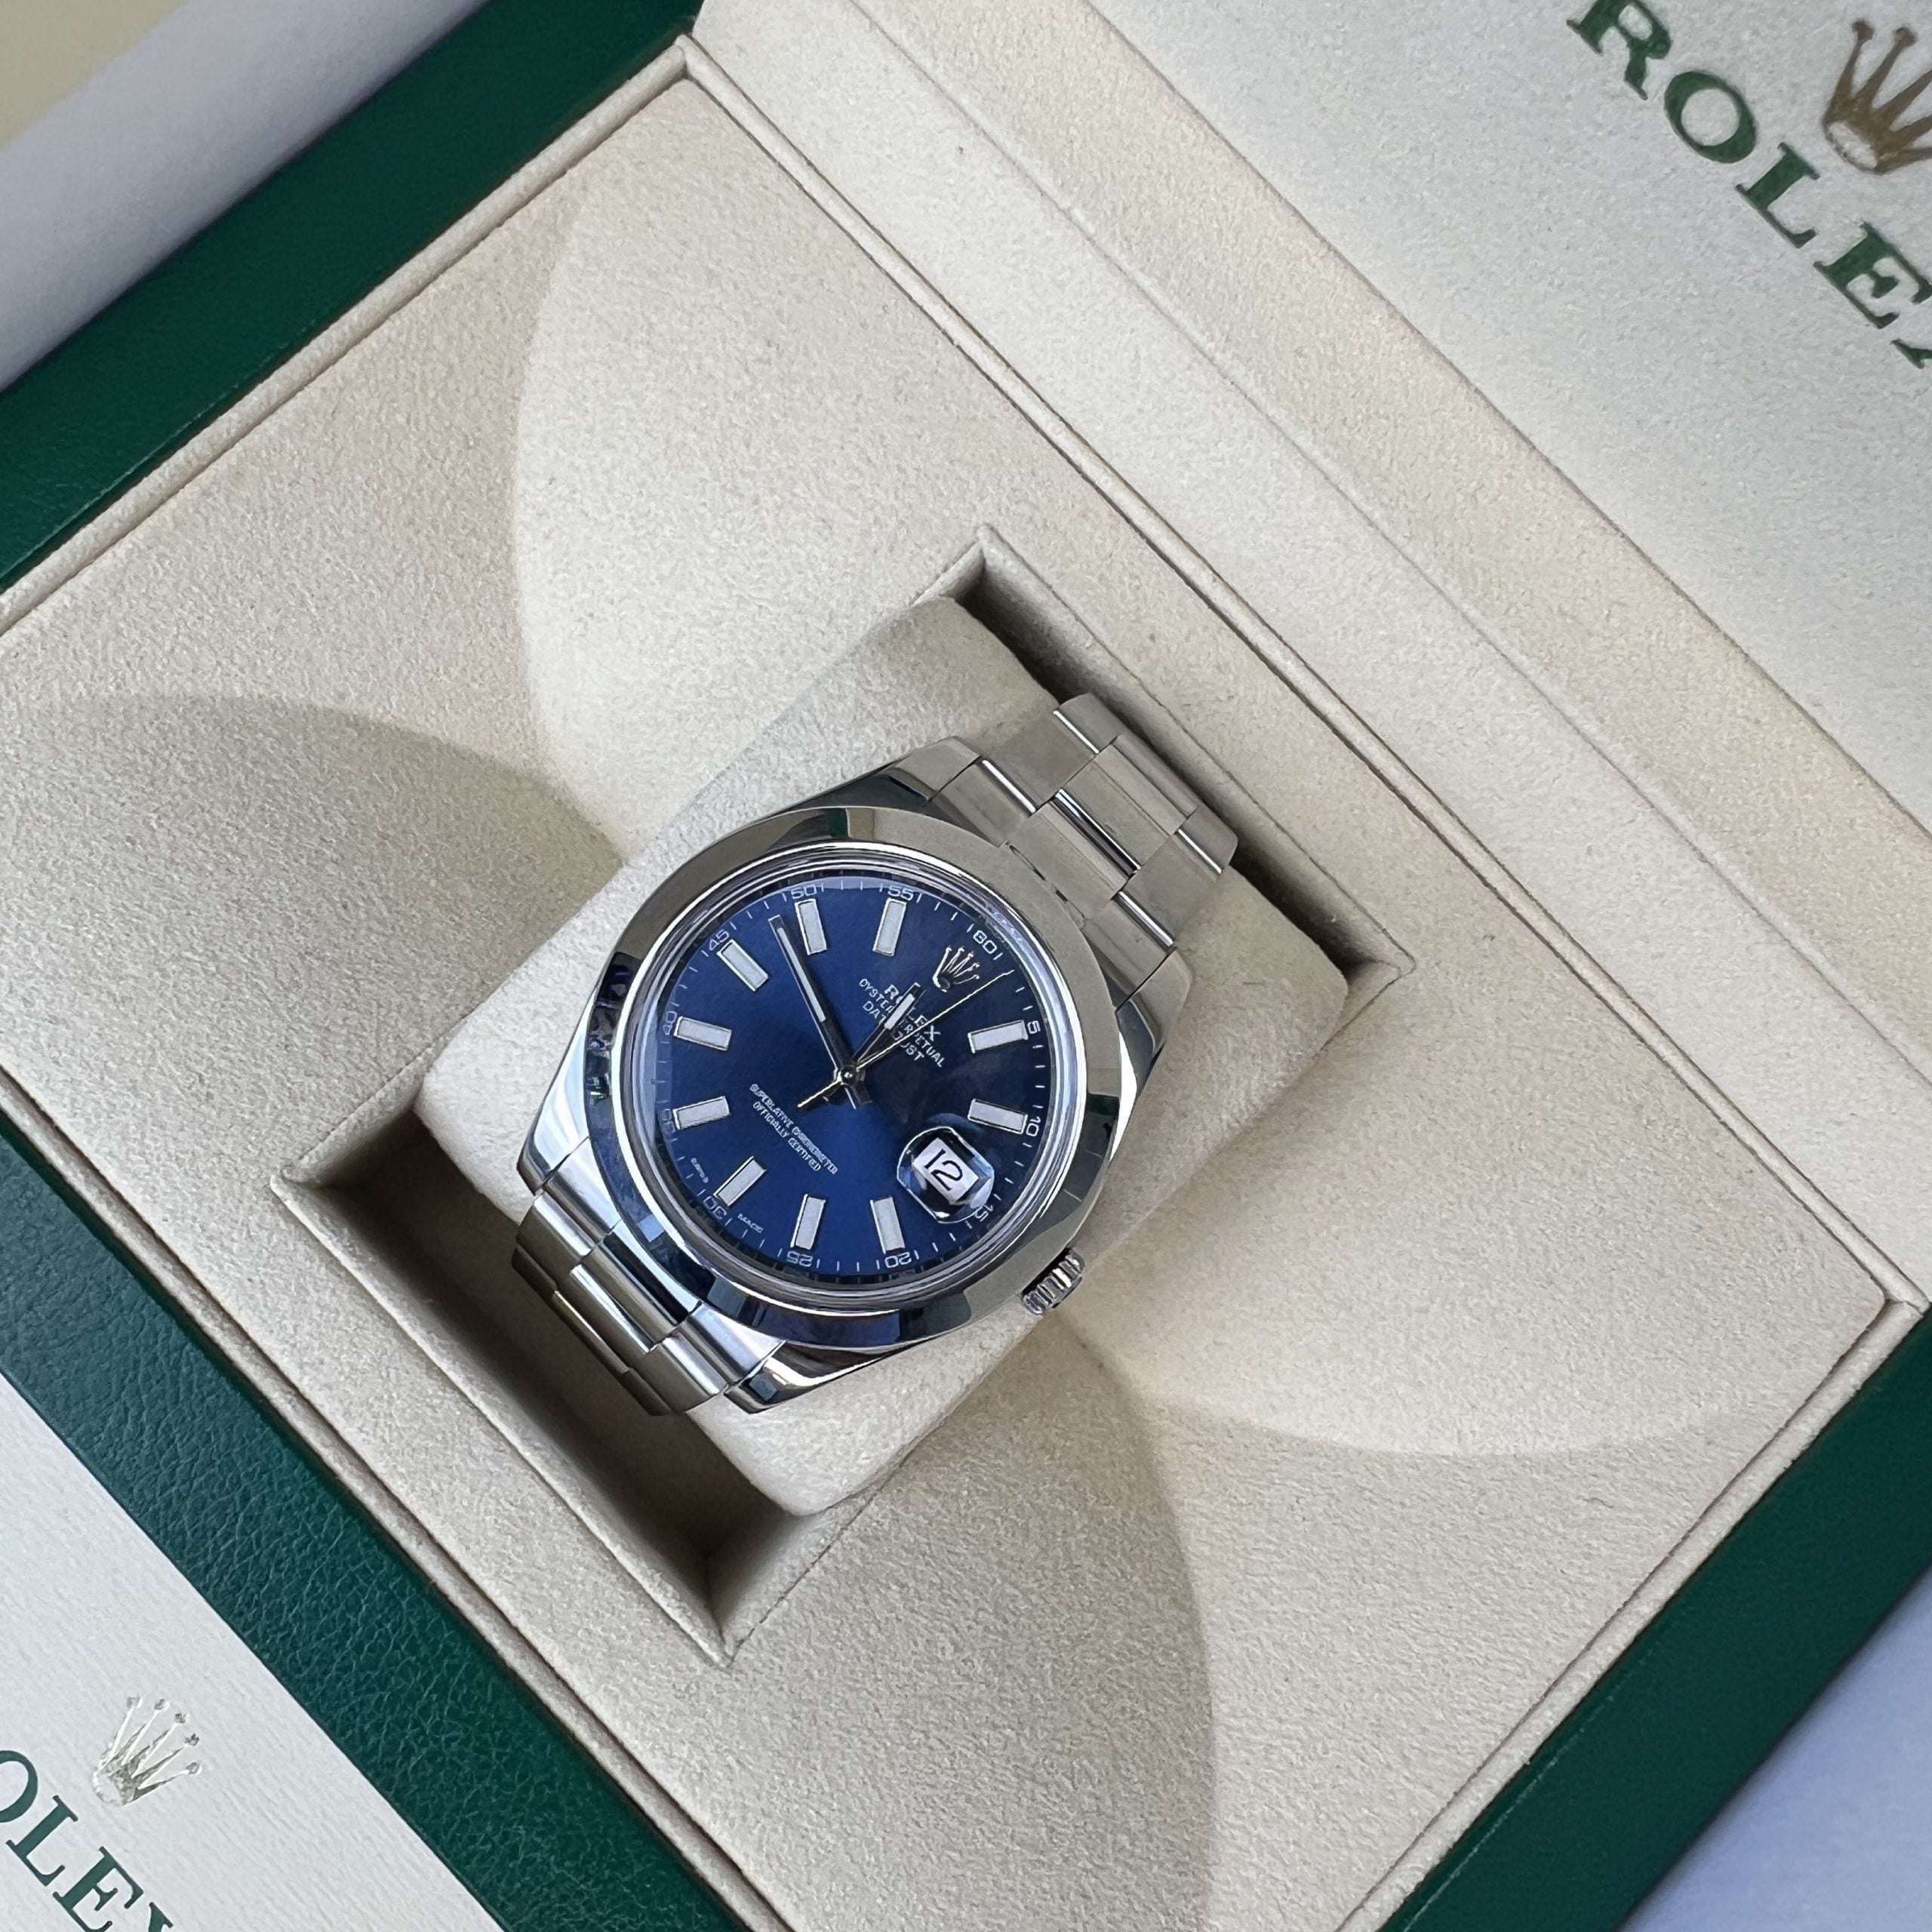 Rolex Datejust II 41mm 116300 Blue Dial